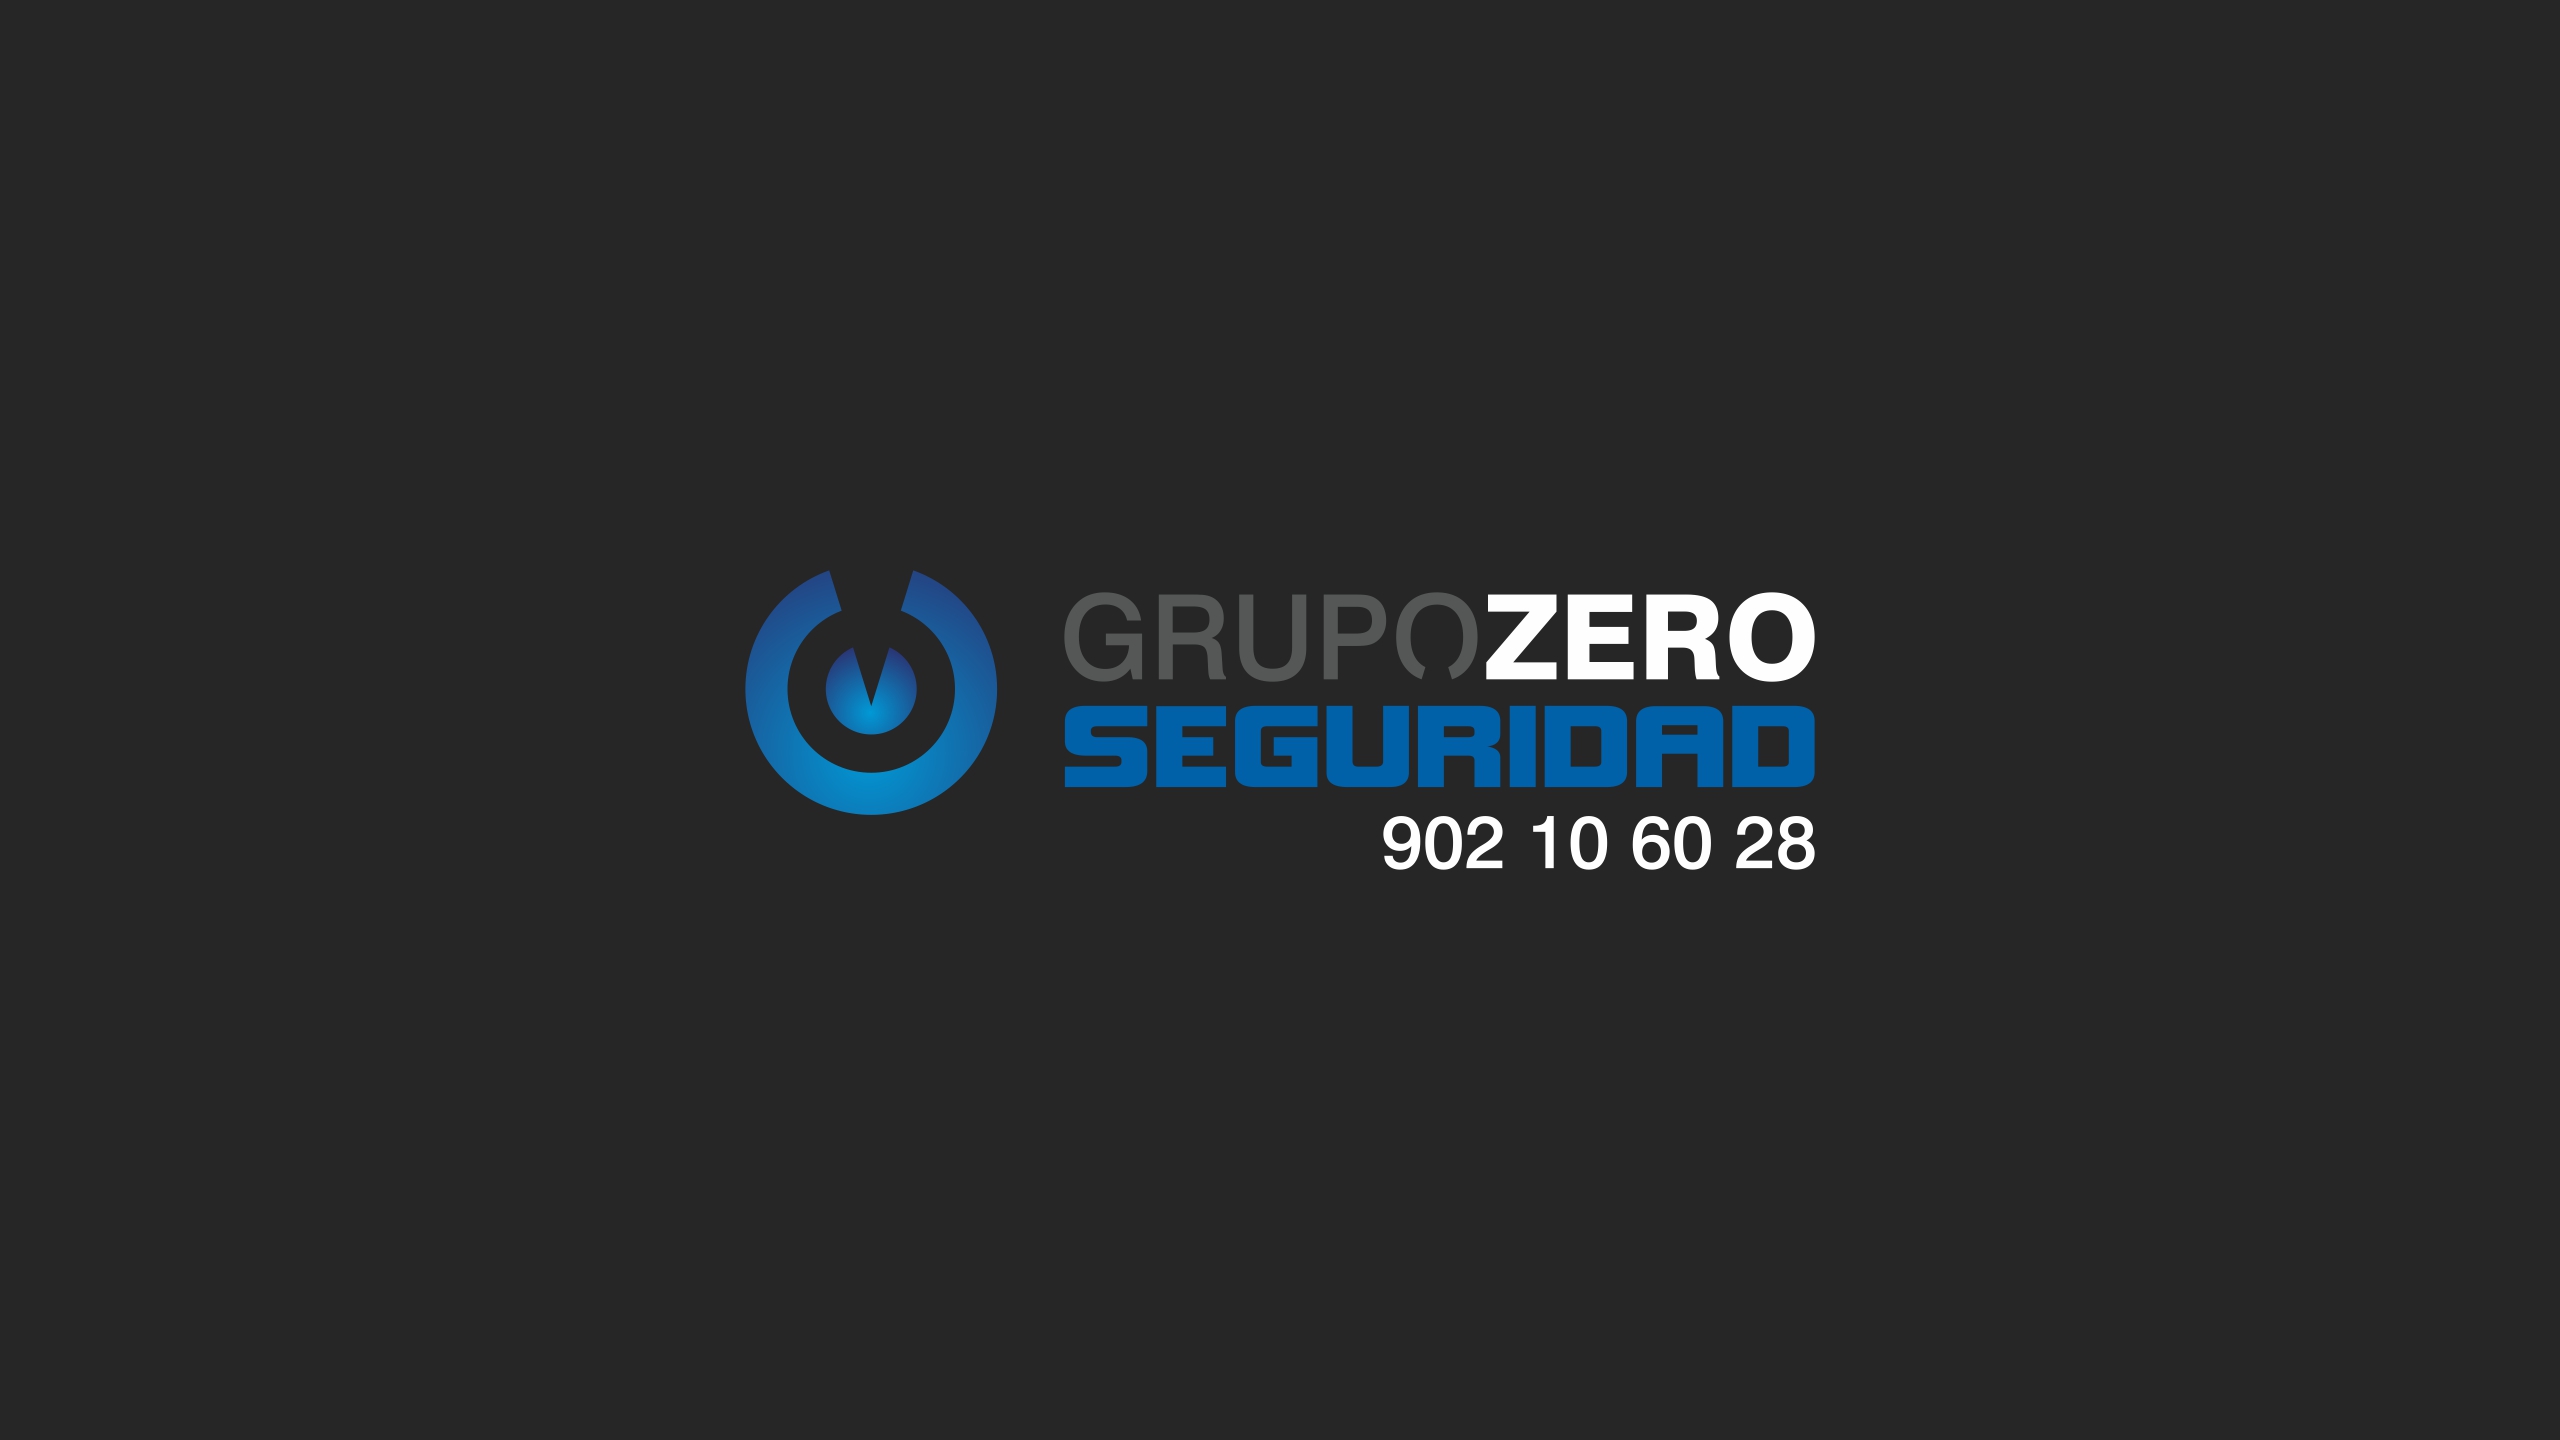 Diseño grupo zero diseño logotipo